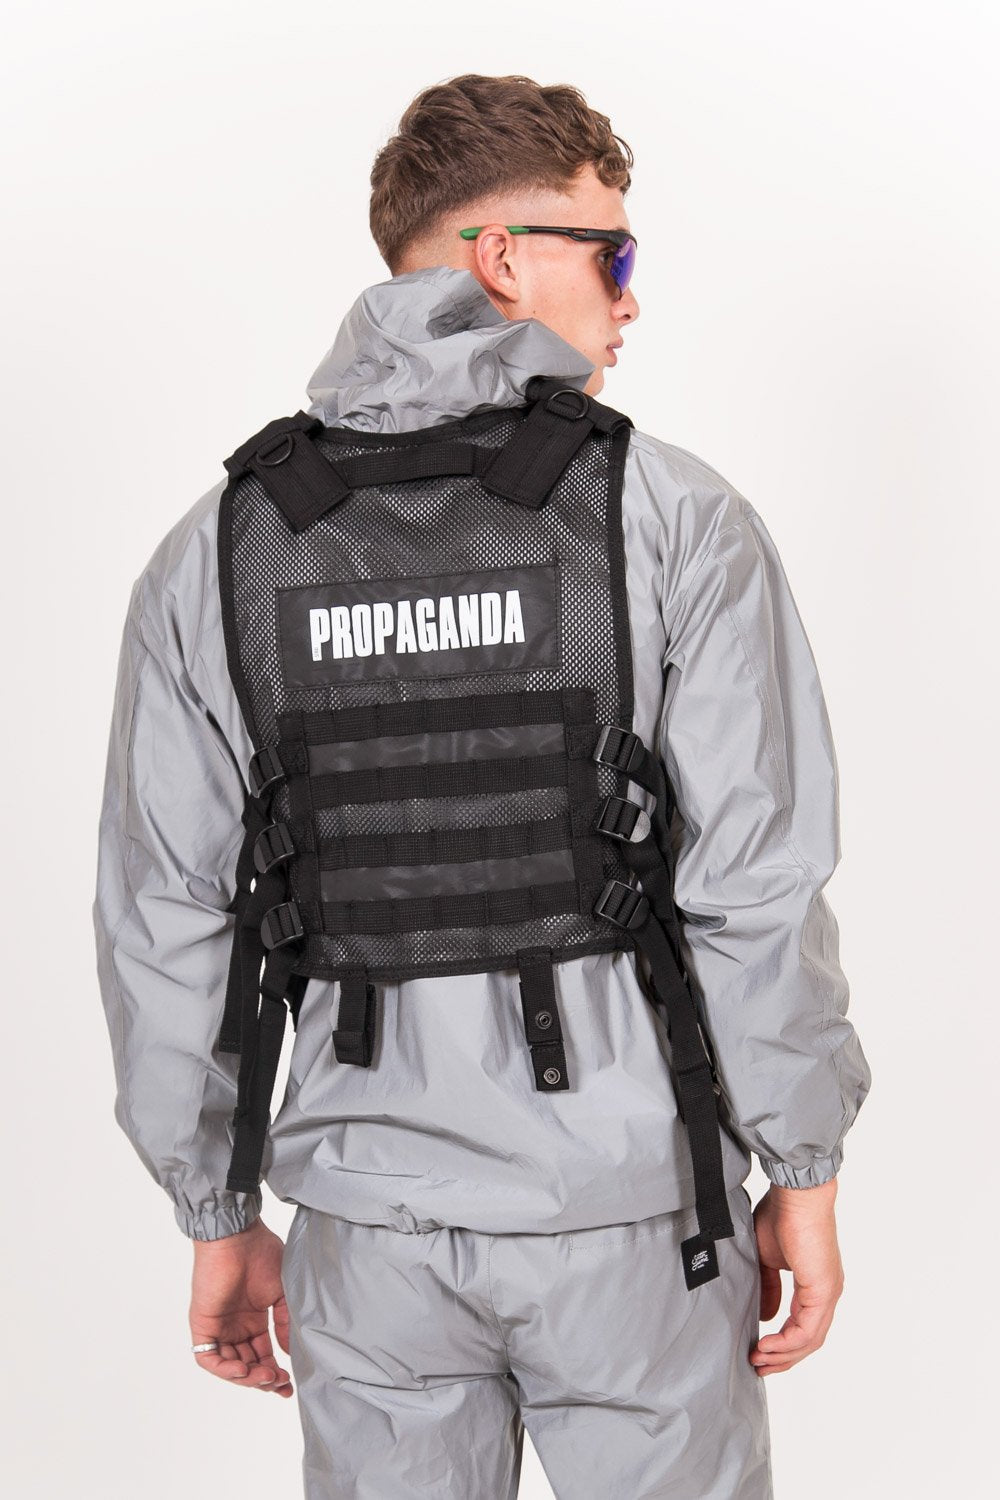 Propaganda Reflective Tactical Jacket Black